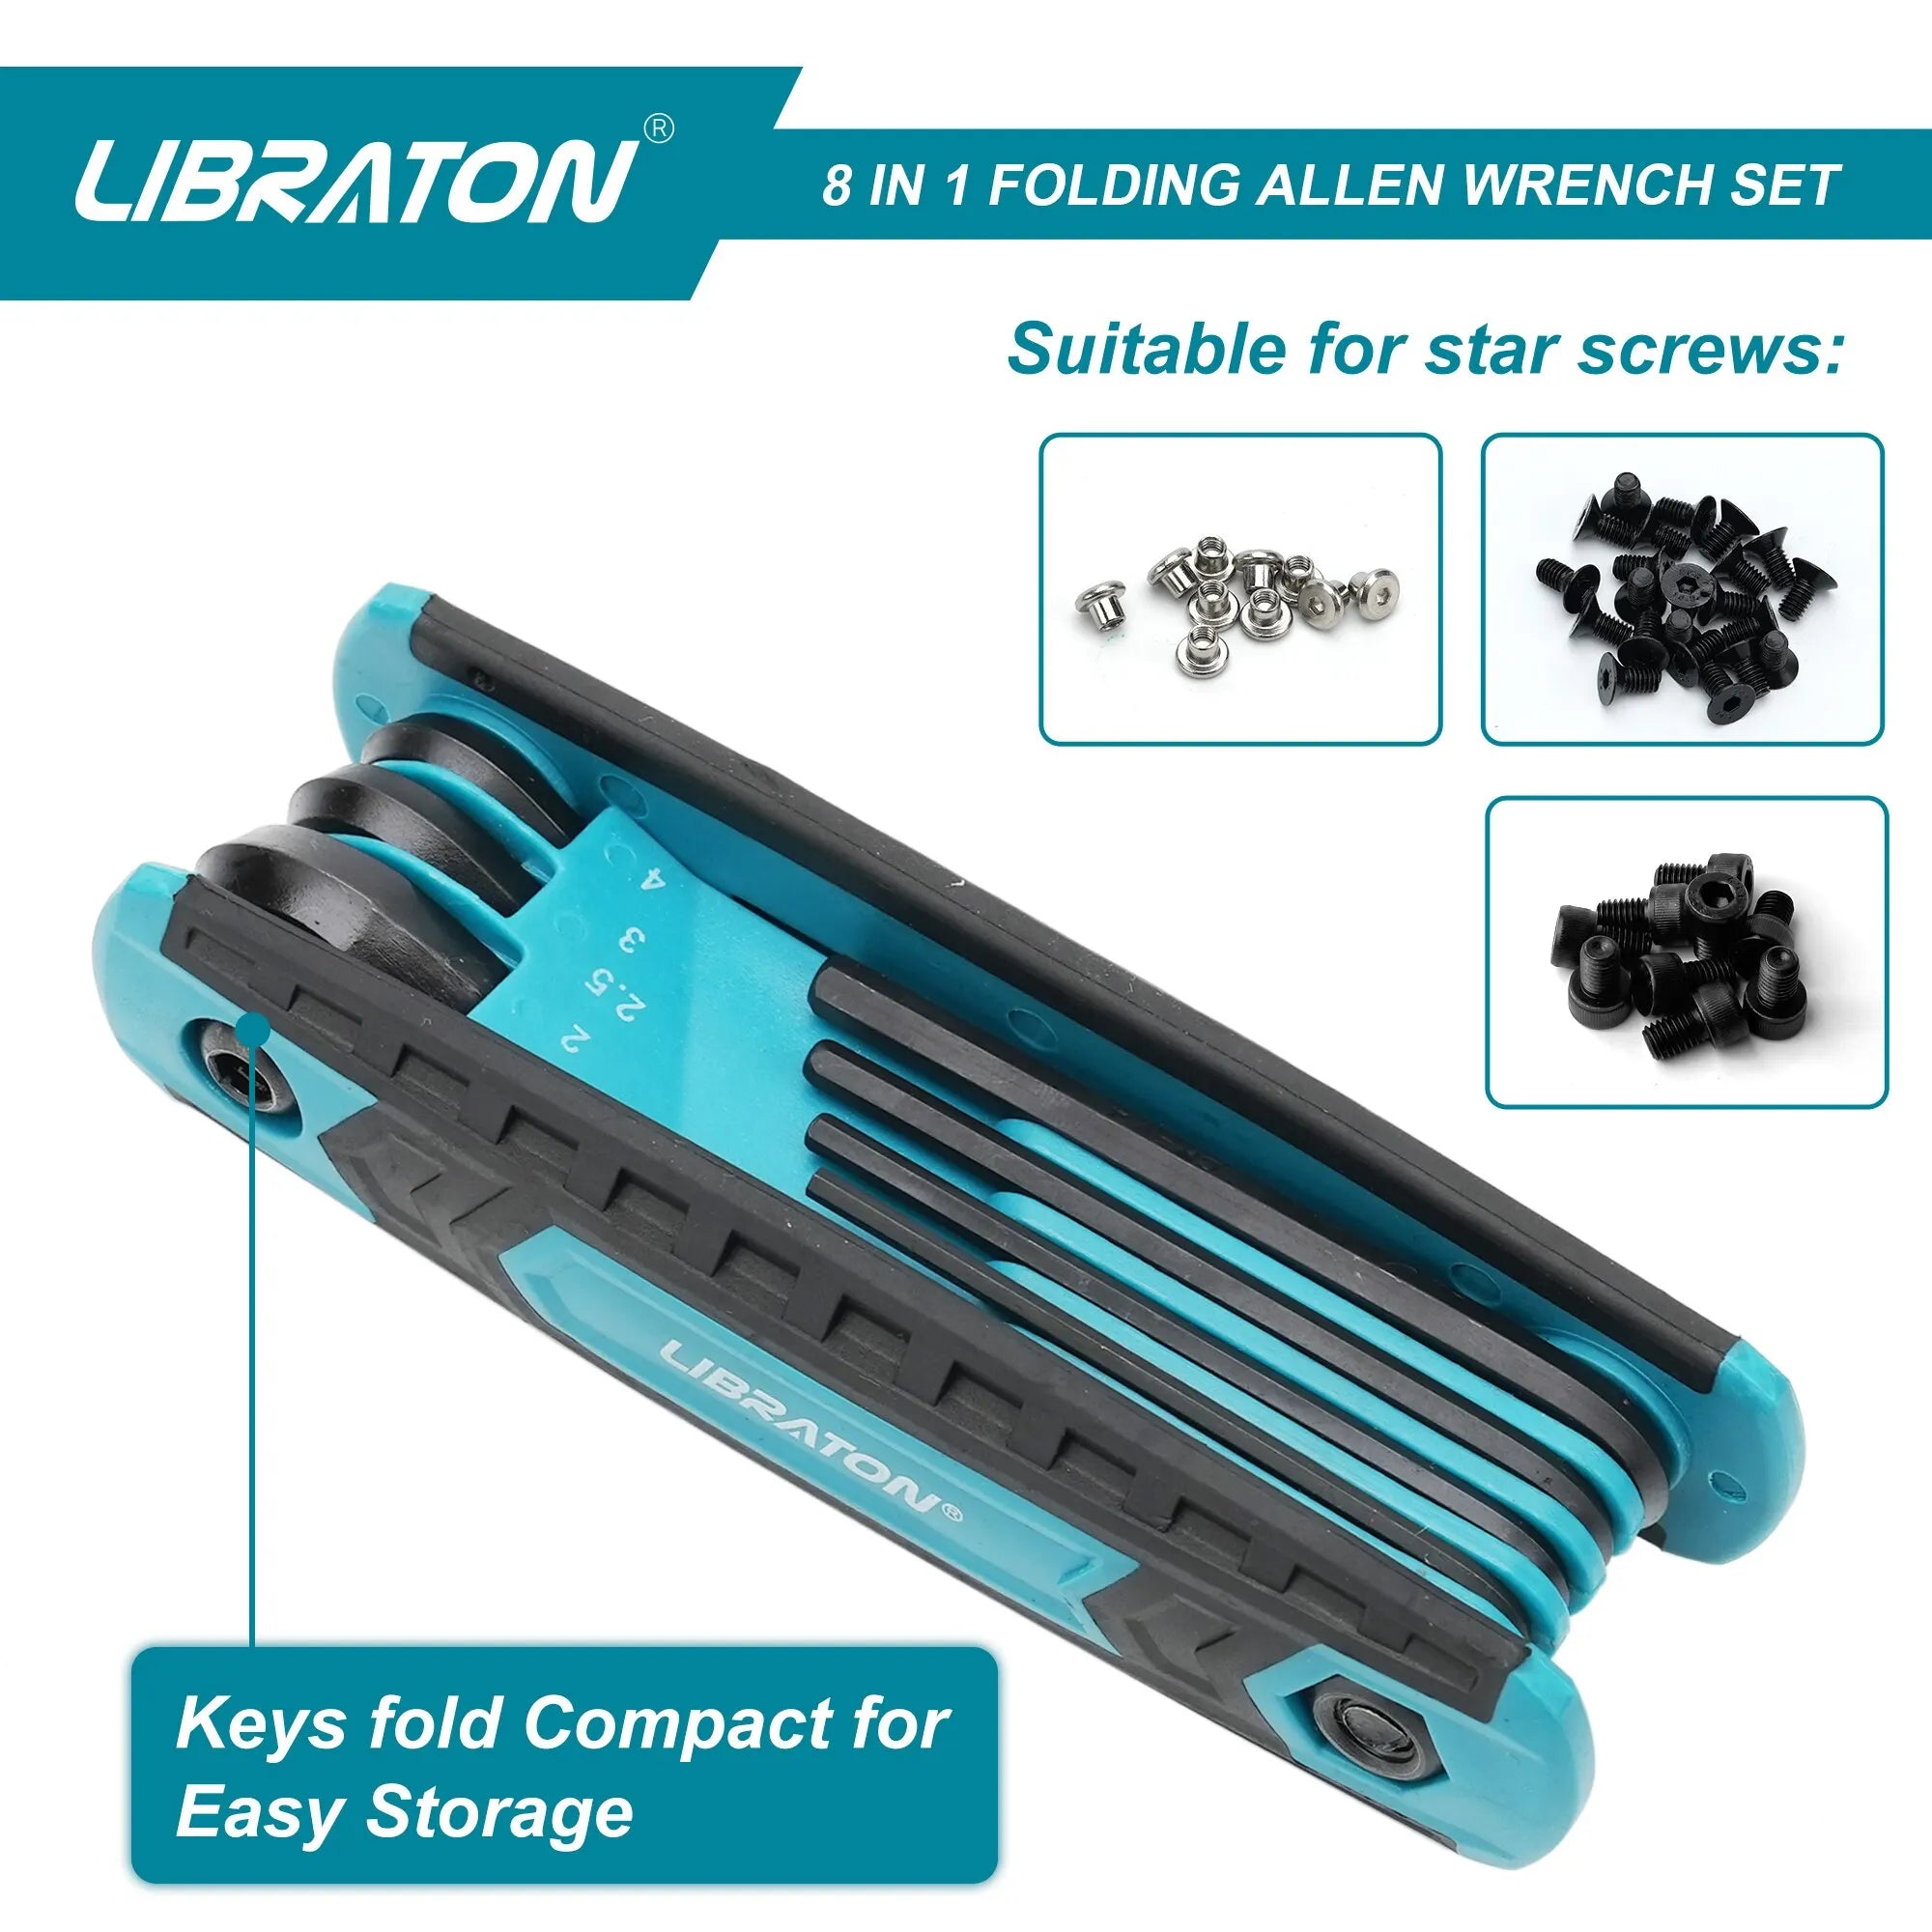 Versatile Portable Tool: LIBRATON 8-in-1 Folding Allen Wrench Set with Metric & Torx Keys